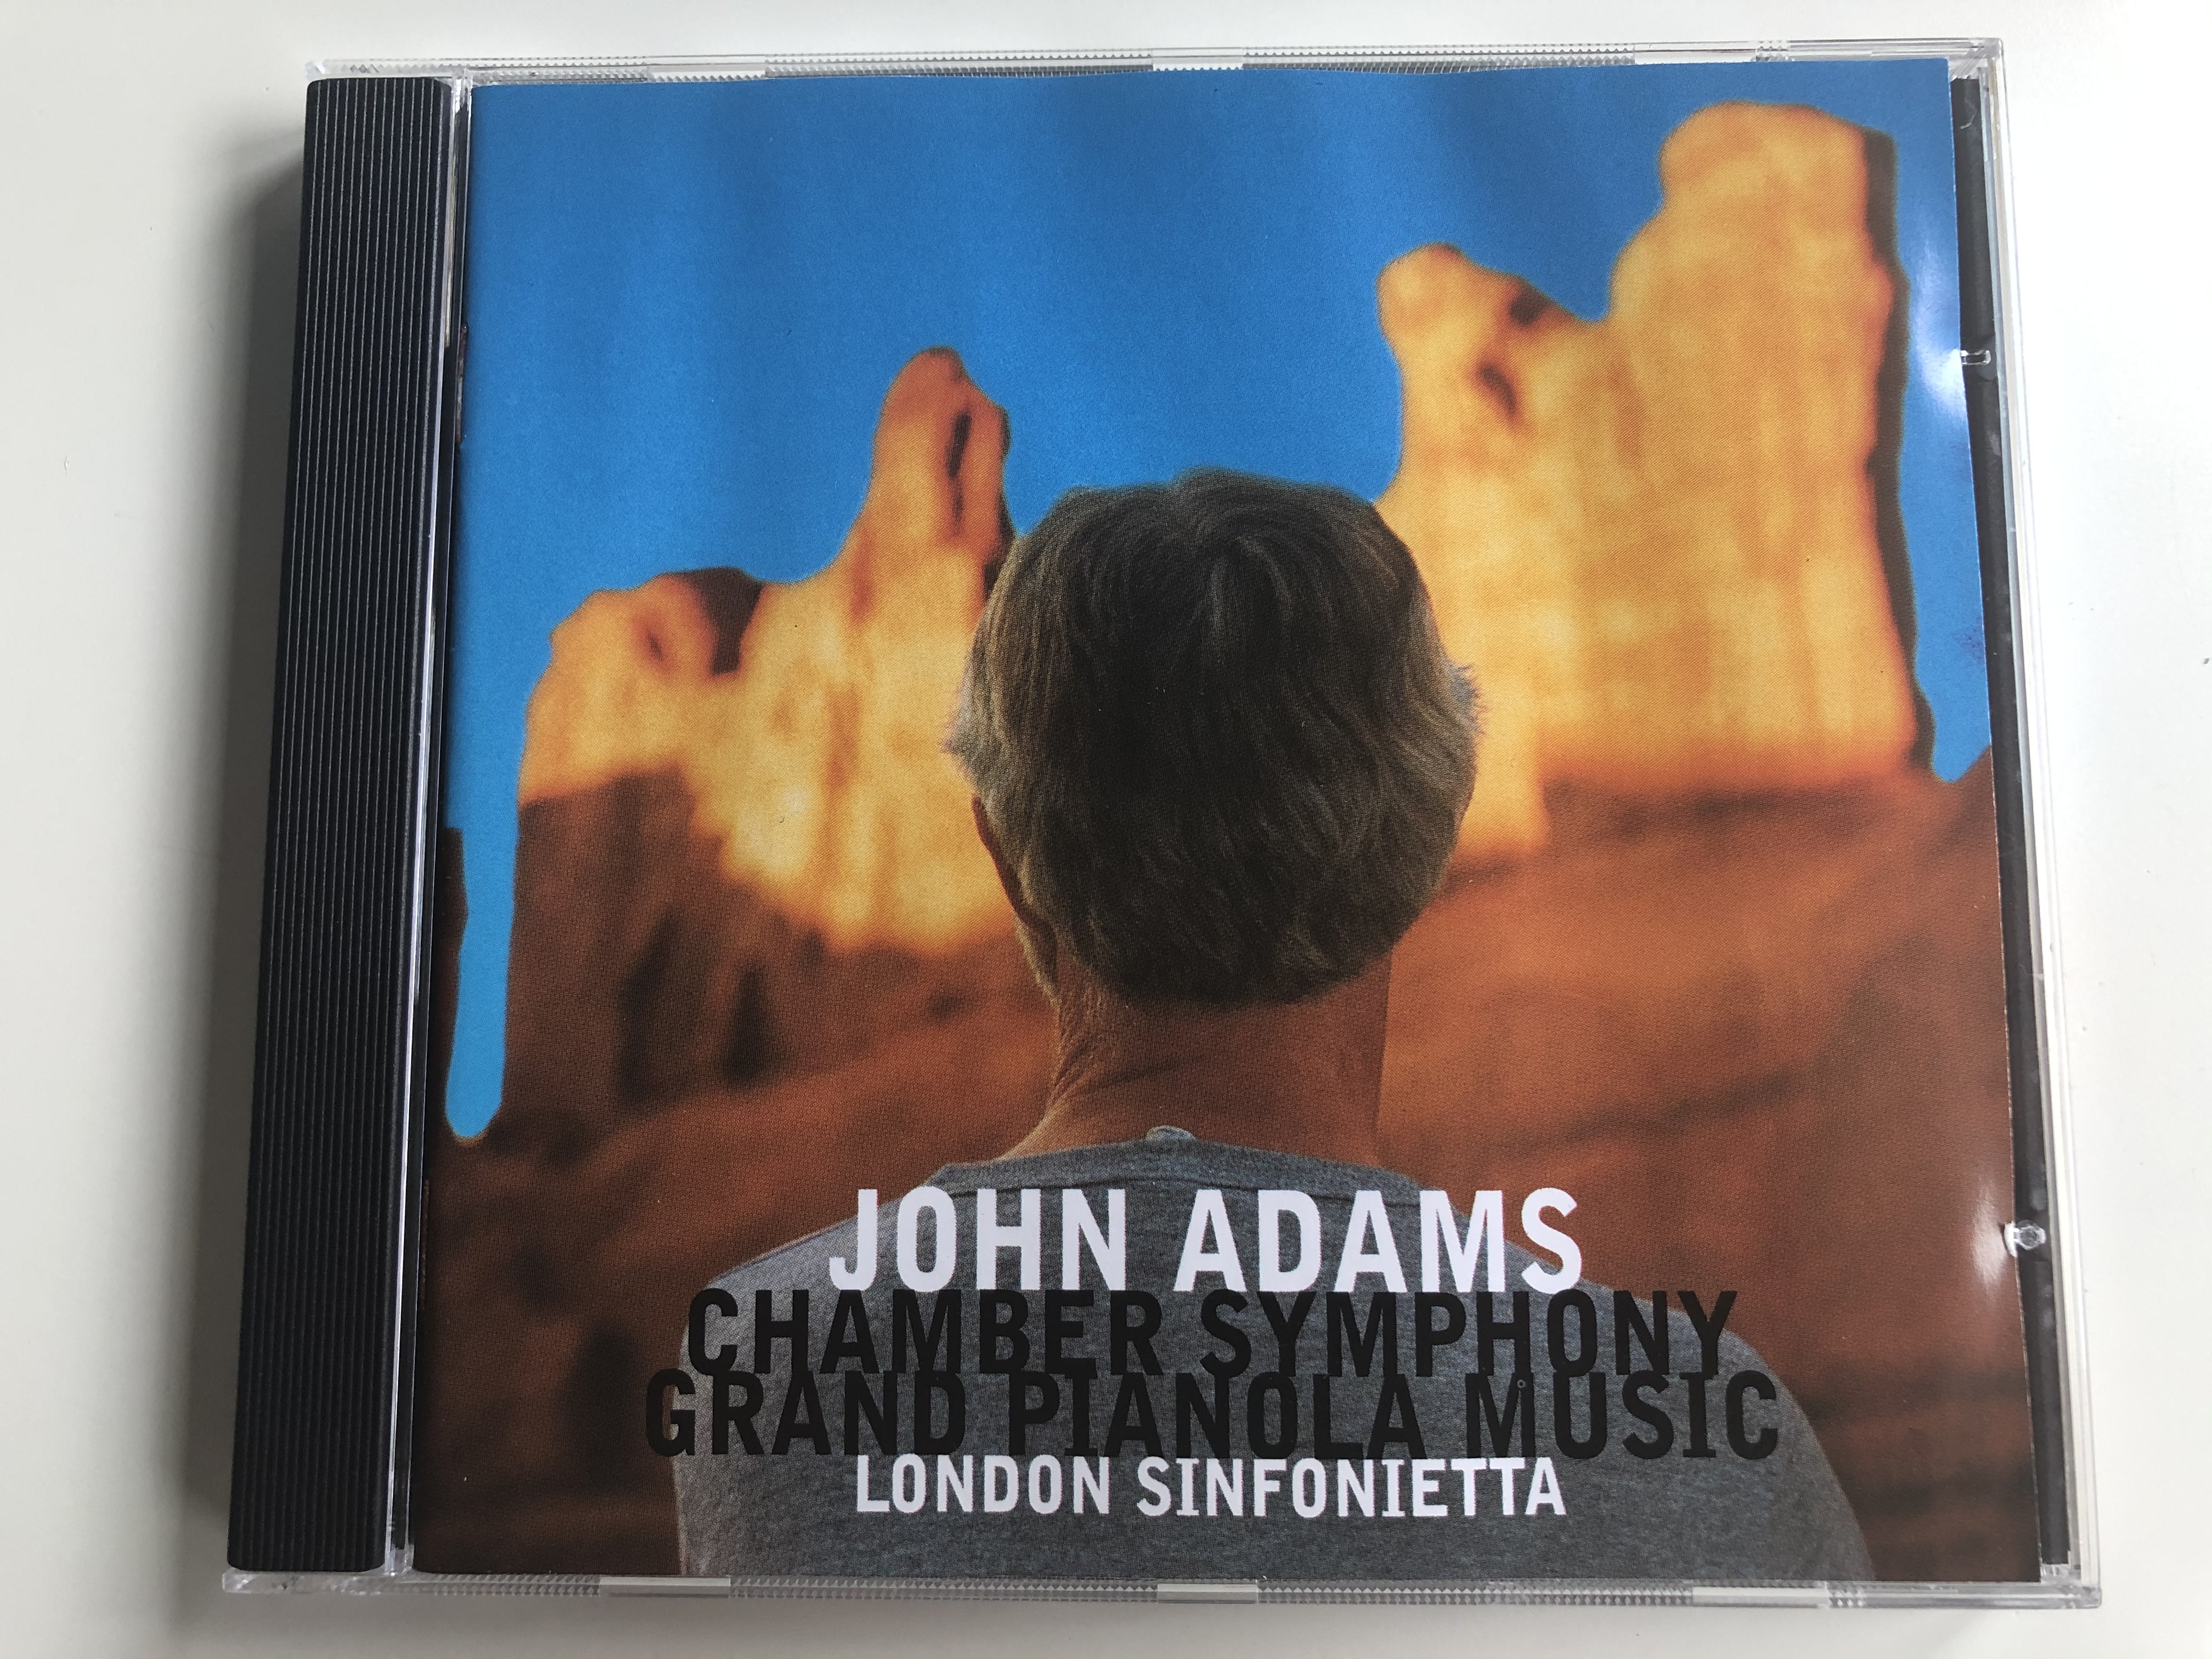 john-adams-chamber-symphony-grand-pianola-music-london-sinfonietta-elektra-nonesuch-audio-cd-1994-7559-79219-2-1-.jpg